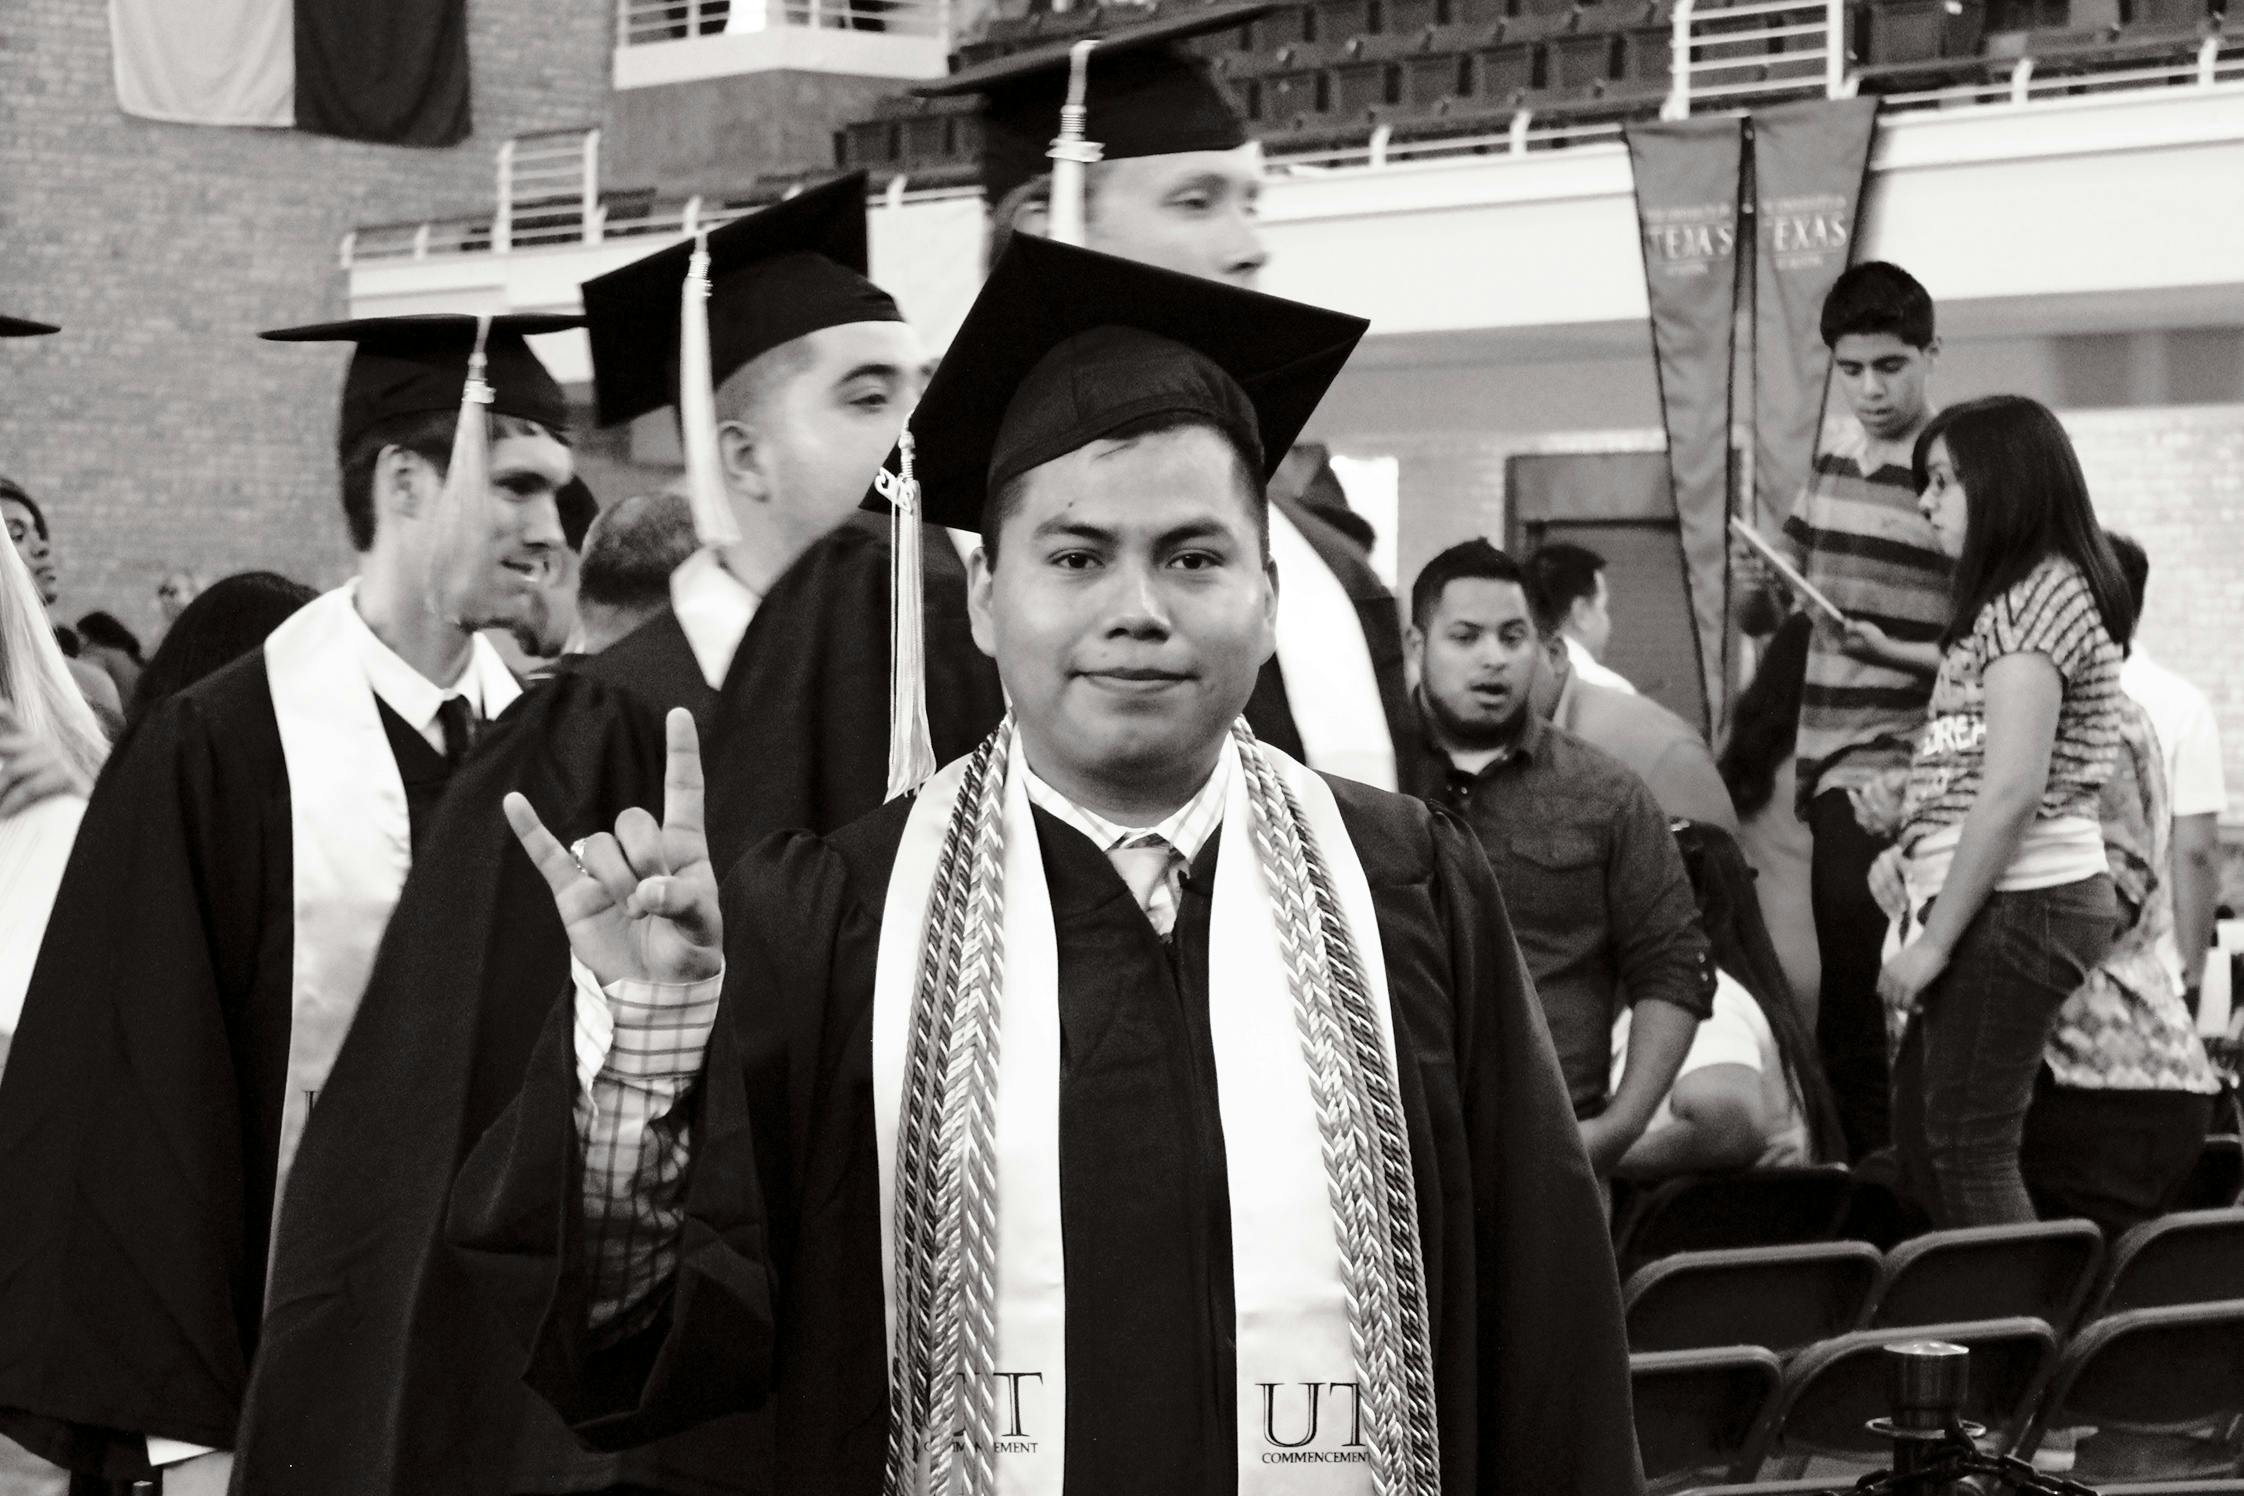 Villalobos graduating from the University of Texas at Austin in 2013.